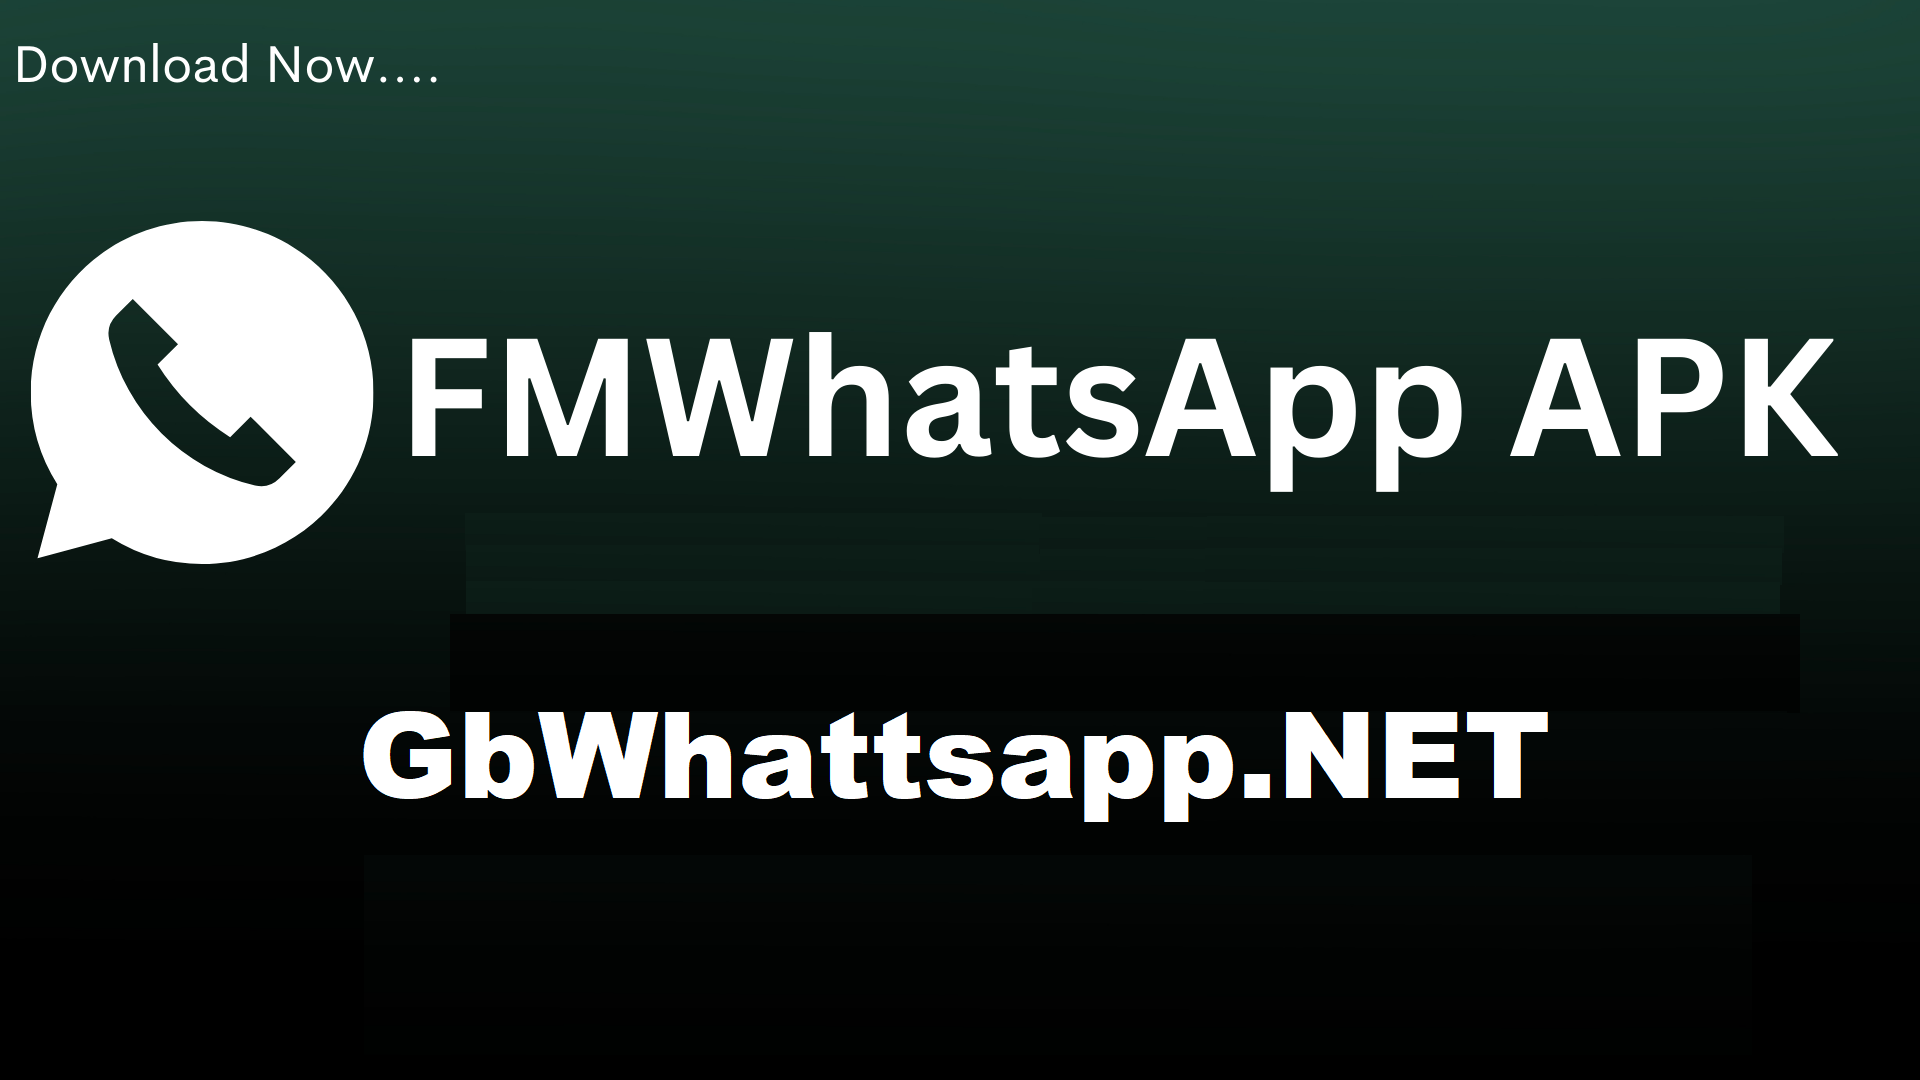 FM Whatsapp apk